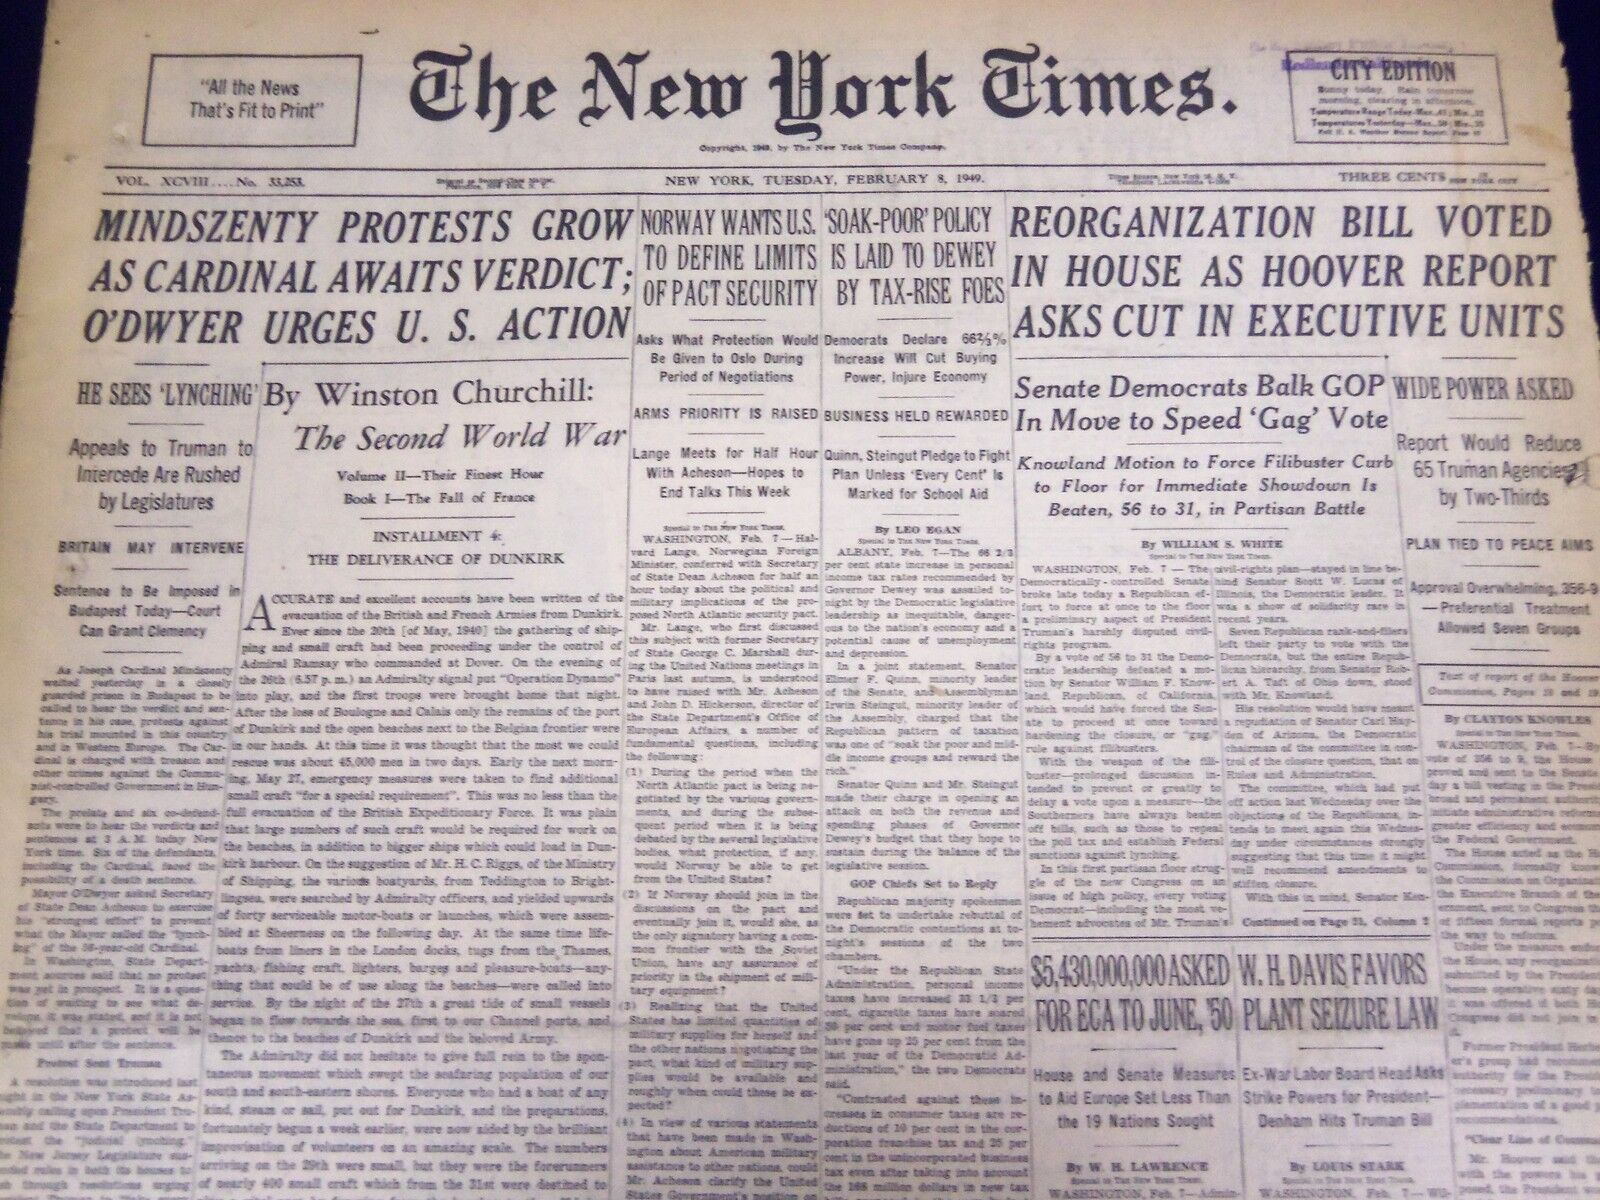 1949 FEB 8 NEW YORK TIMES - MINDSZENTY PROTESTS GROW AS CARDINAL AWAITS- NT 1491